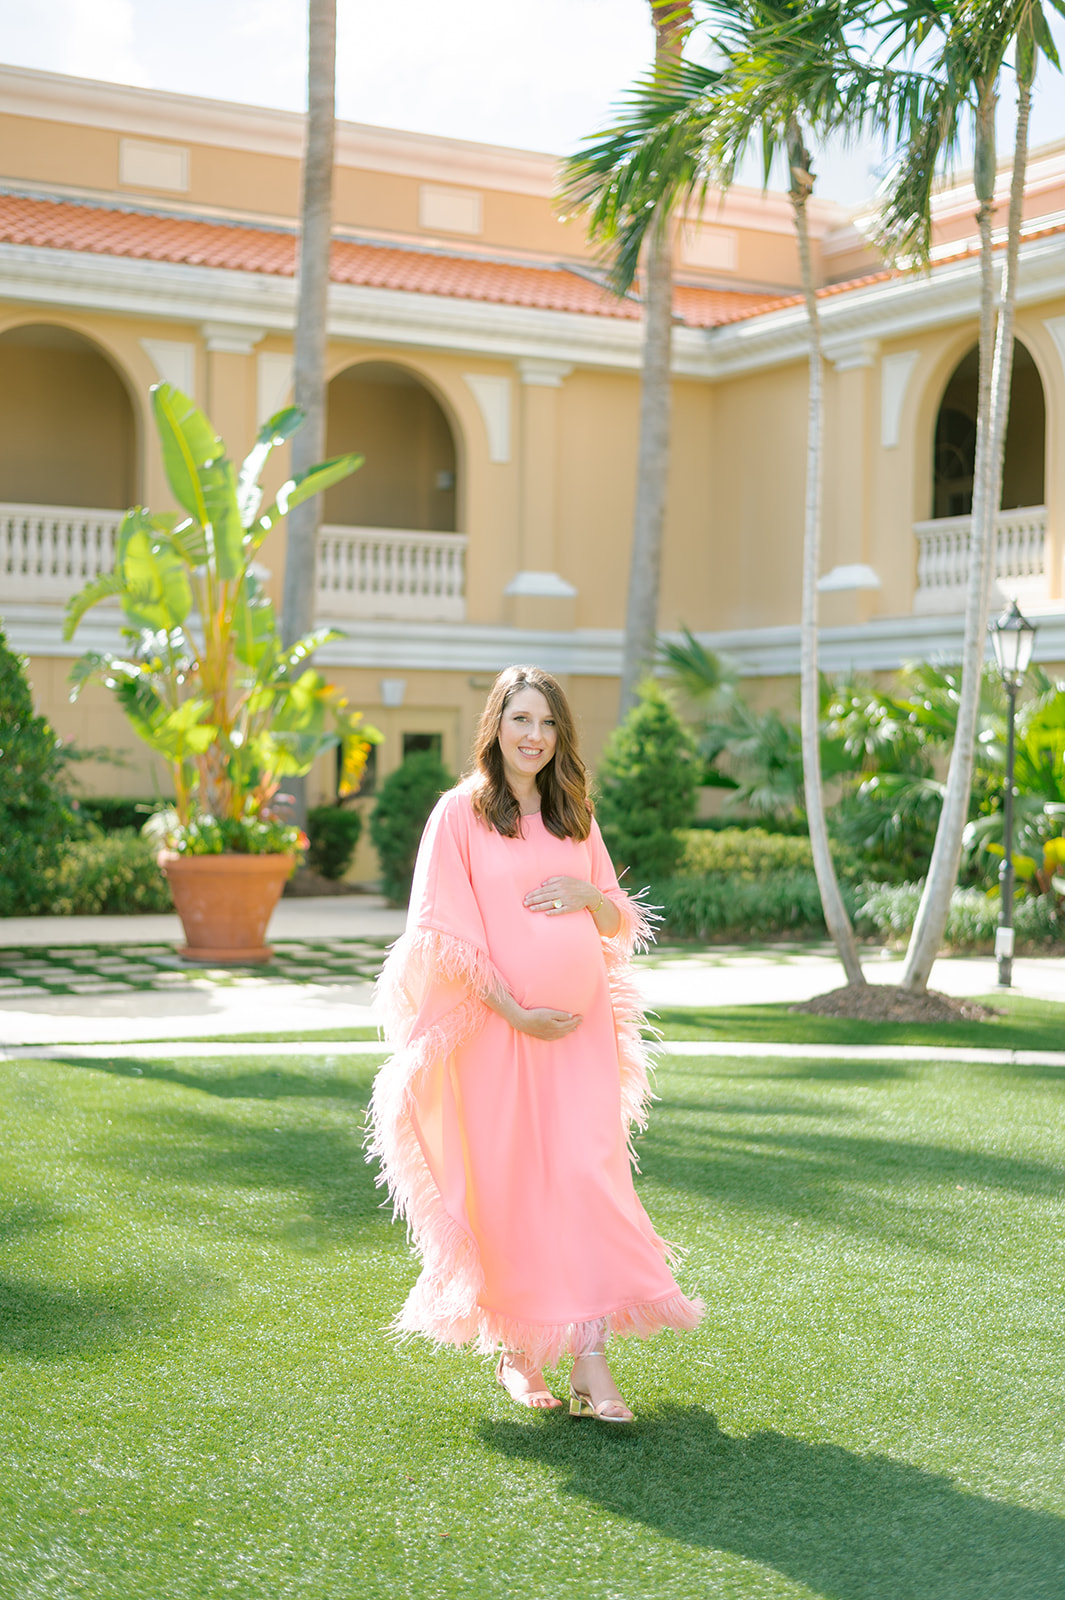 Amanda beaming in her custom green maternity dress at The Ritz Carlton